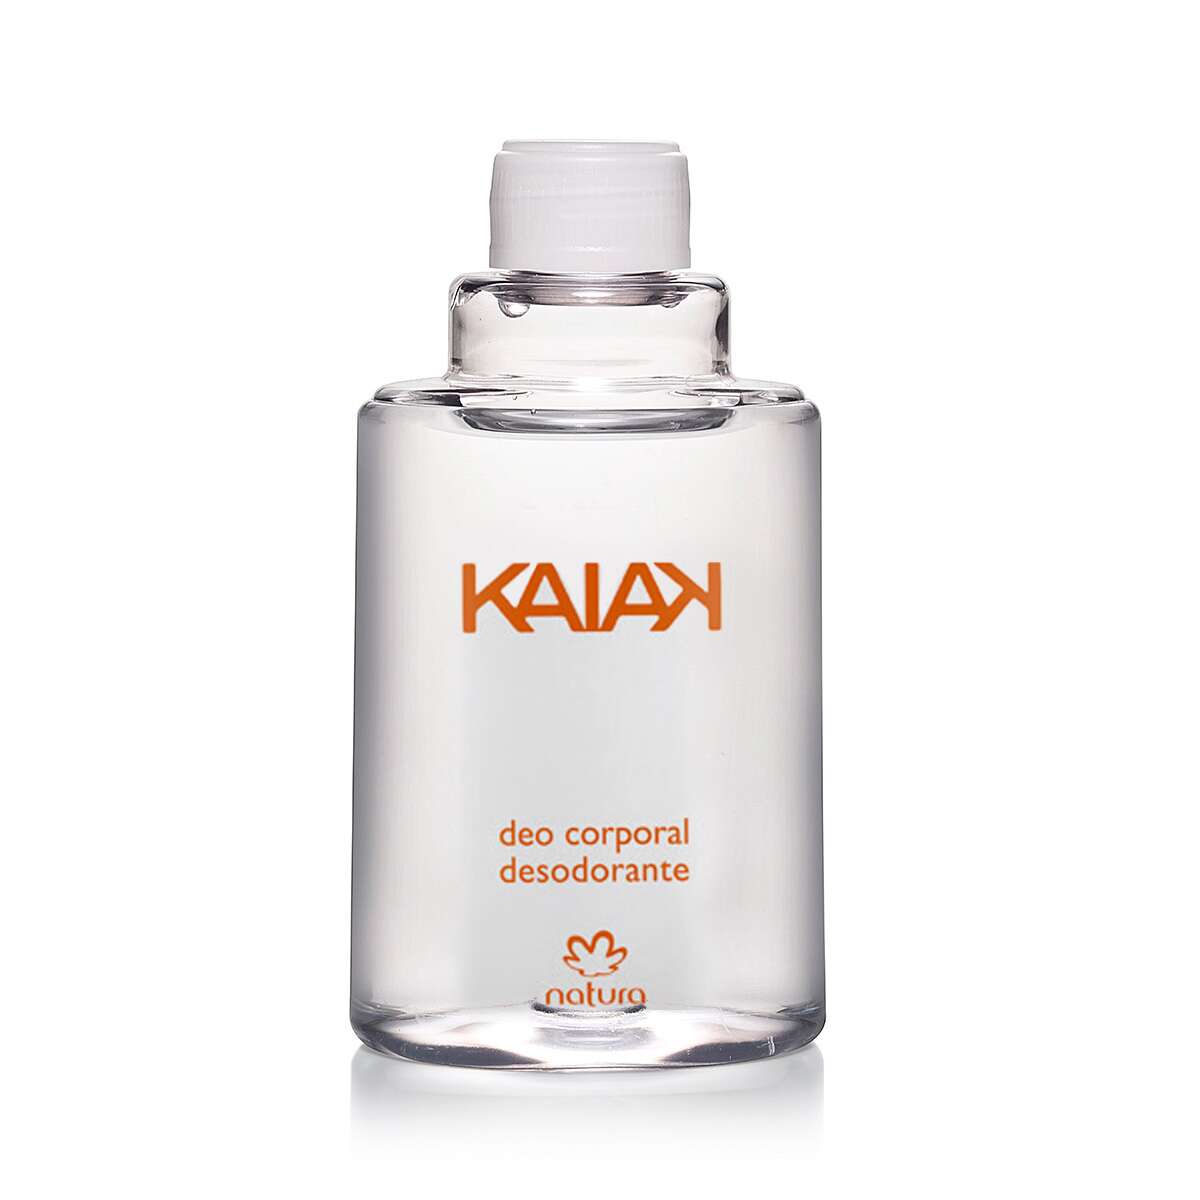 Kaiak Natura Desodorante Cheap Sale, SAVE 52% 